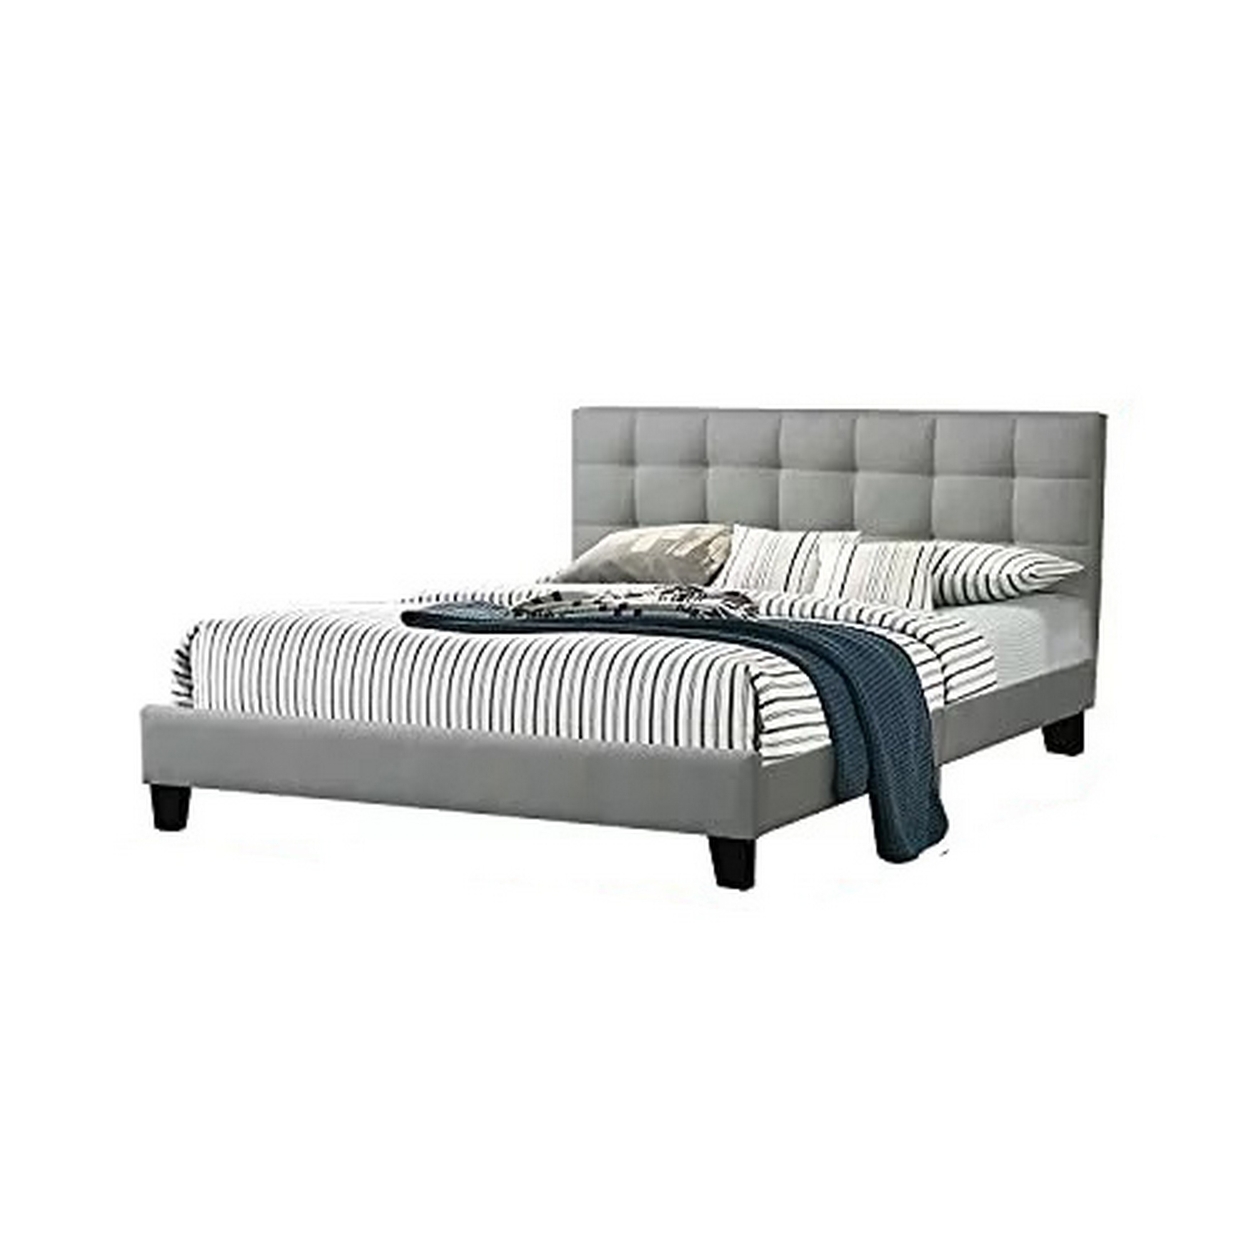 Dex Modern Platform California King Bed, Tufted Upholstery, Light Gray- Saltoro Sherpi